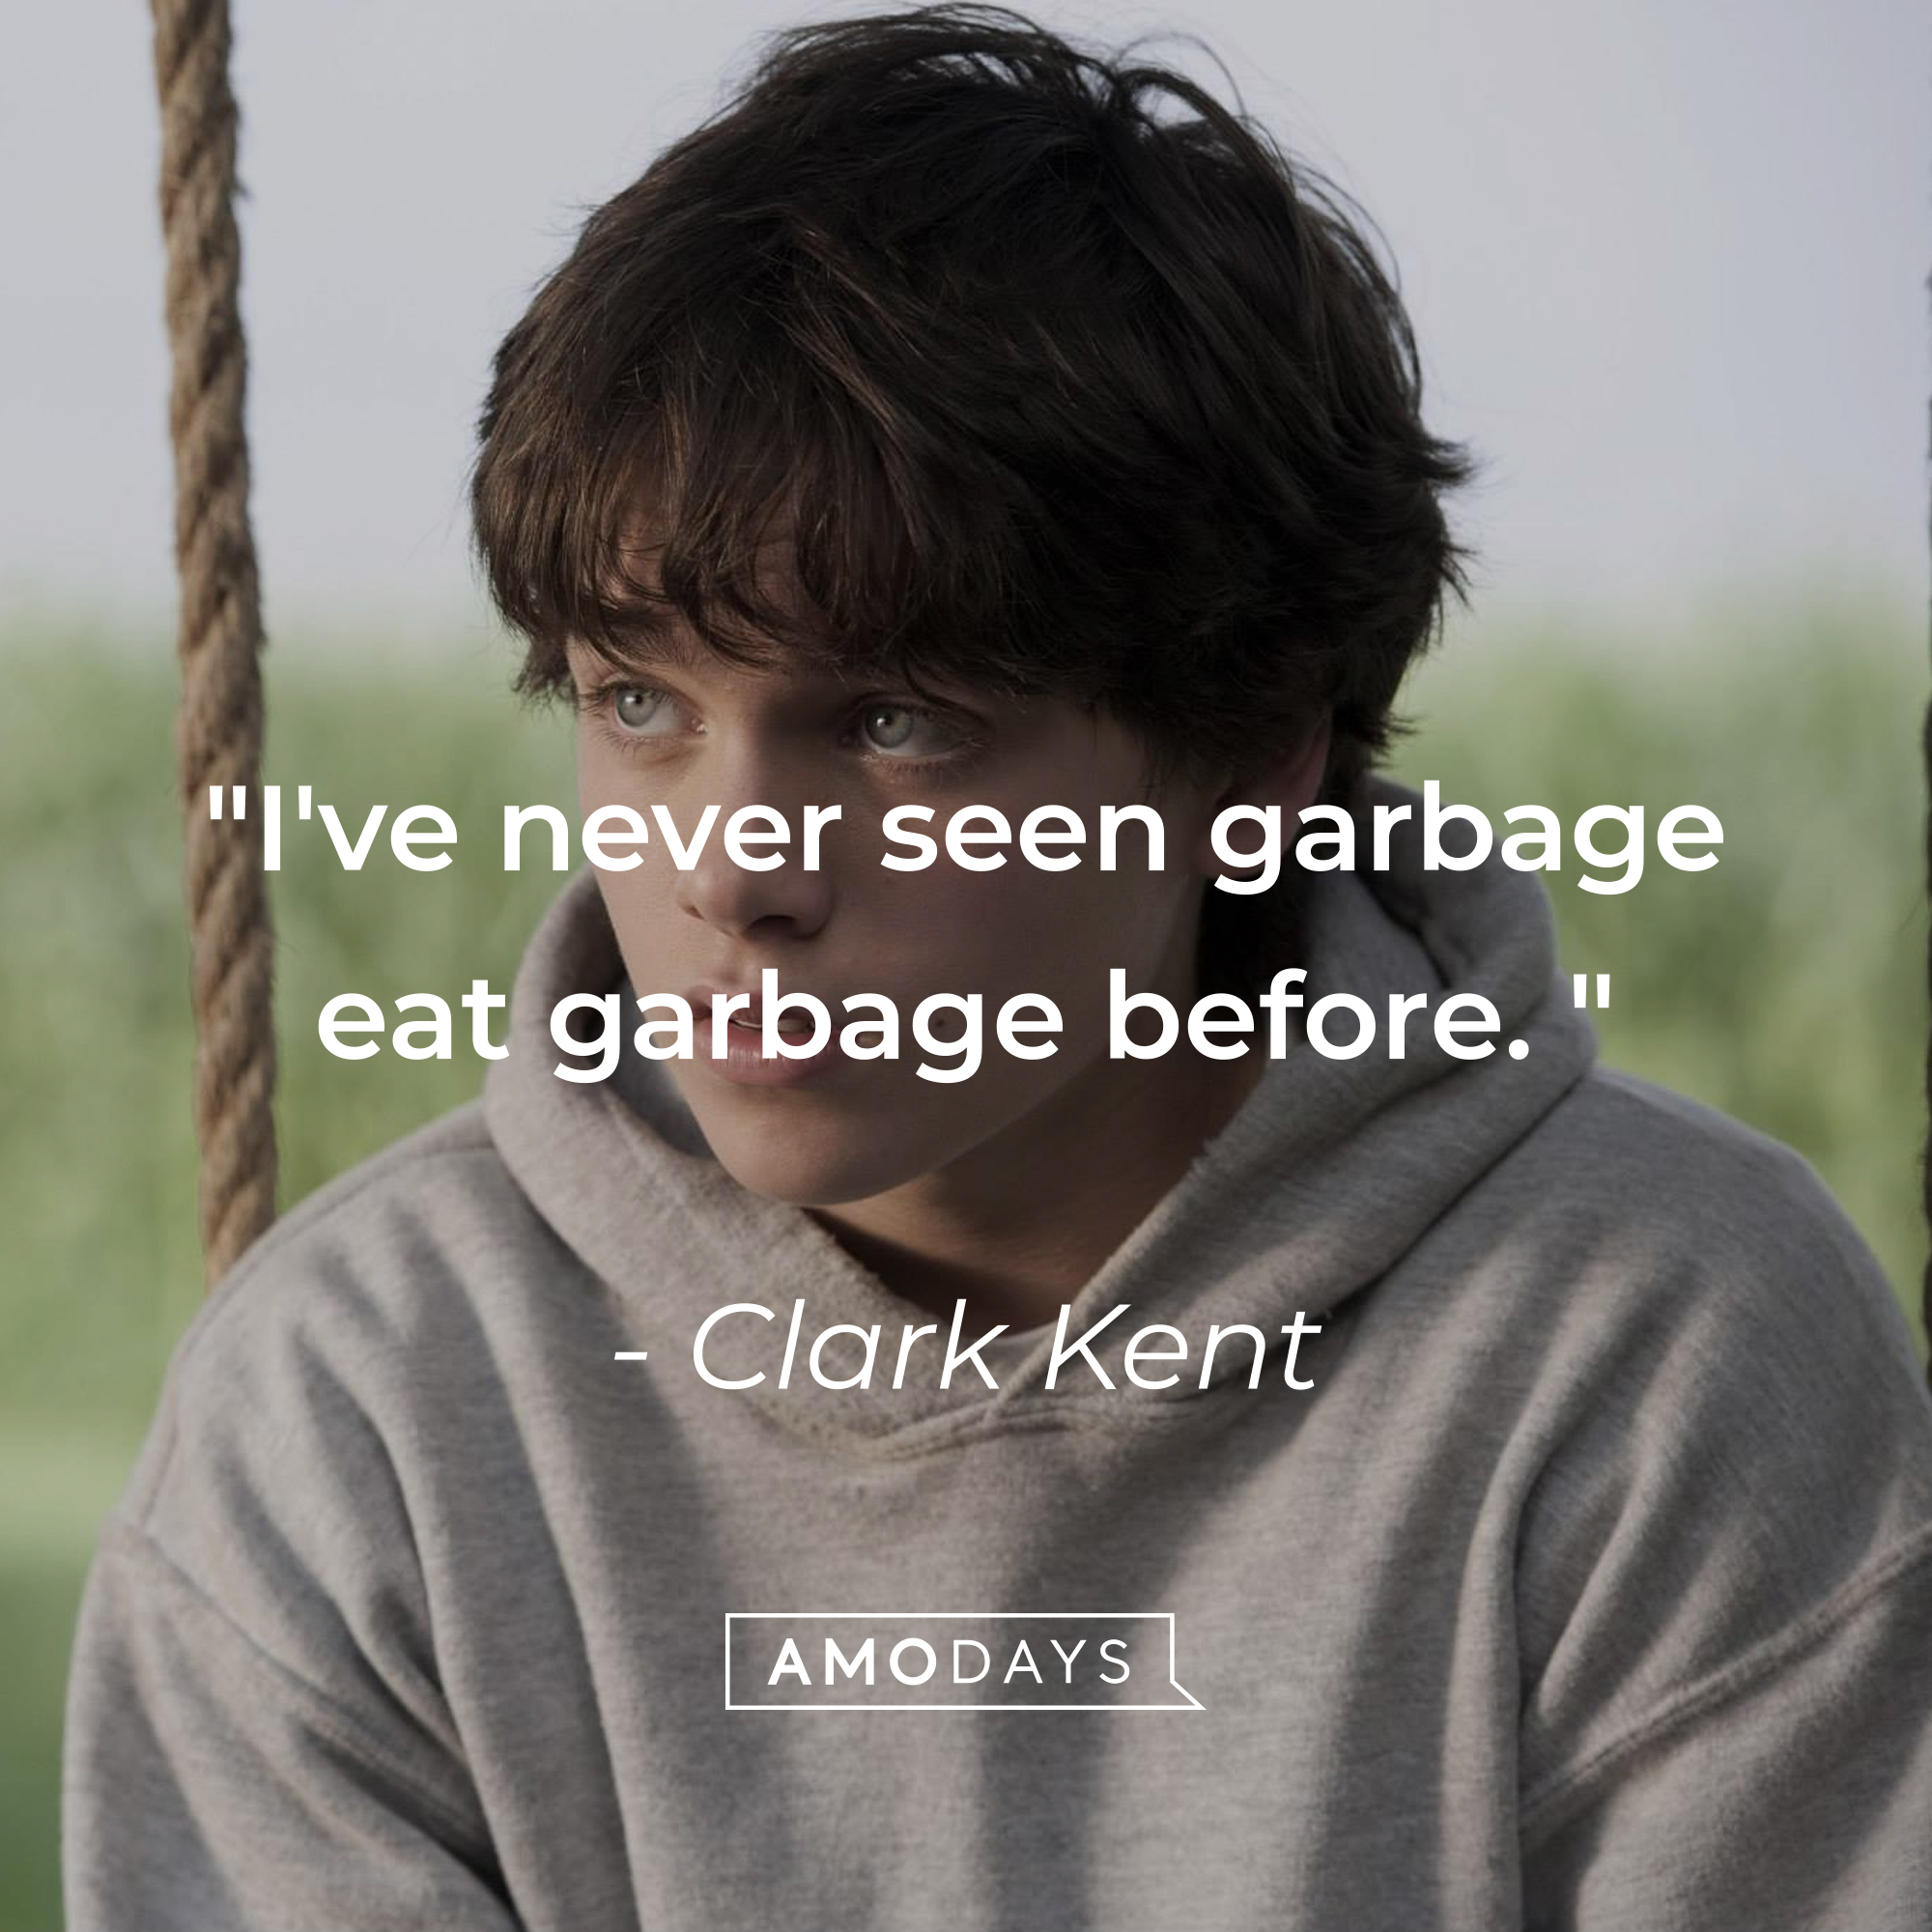 Clark Kent: "I've never seen garbage eat garbage before." | Source: Facebook/manofsteel